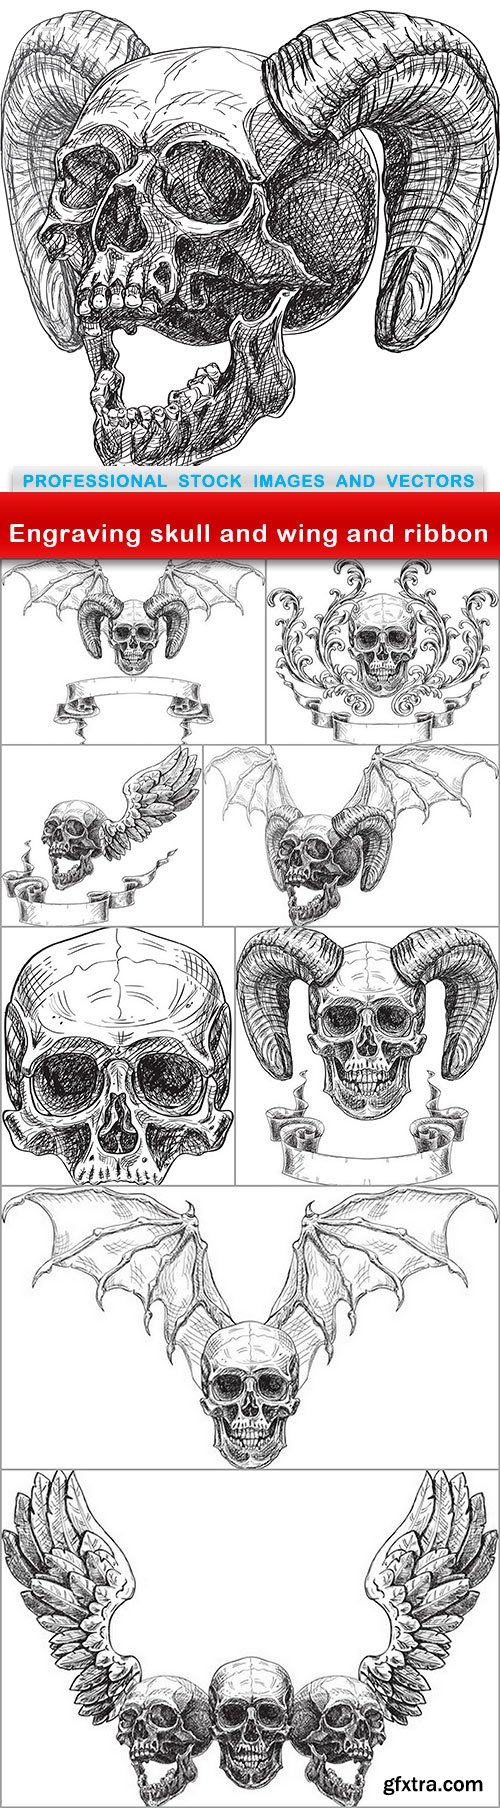 Engraving skull and wing and ribbon - 9 EPS